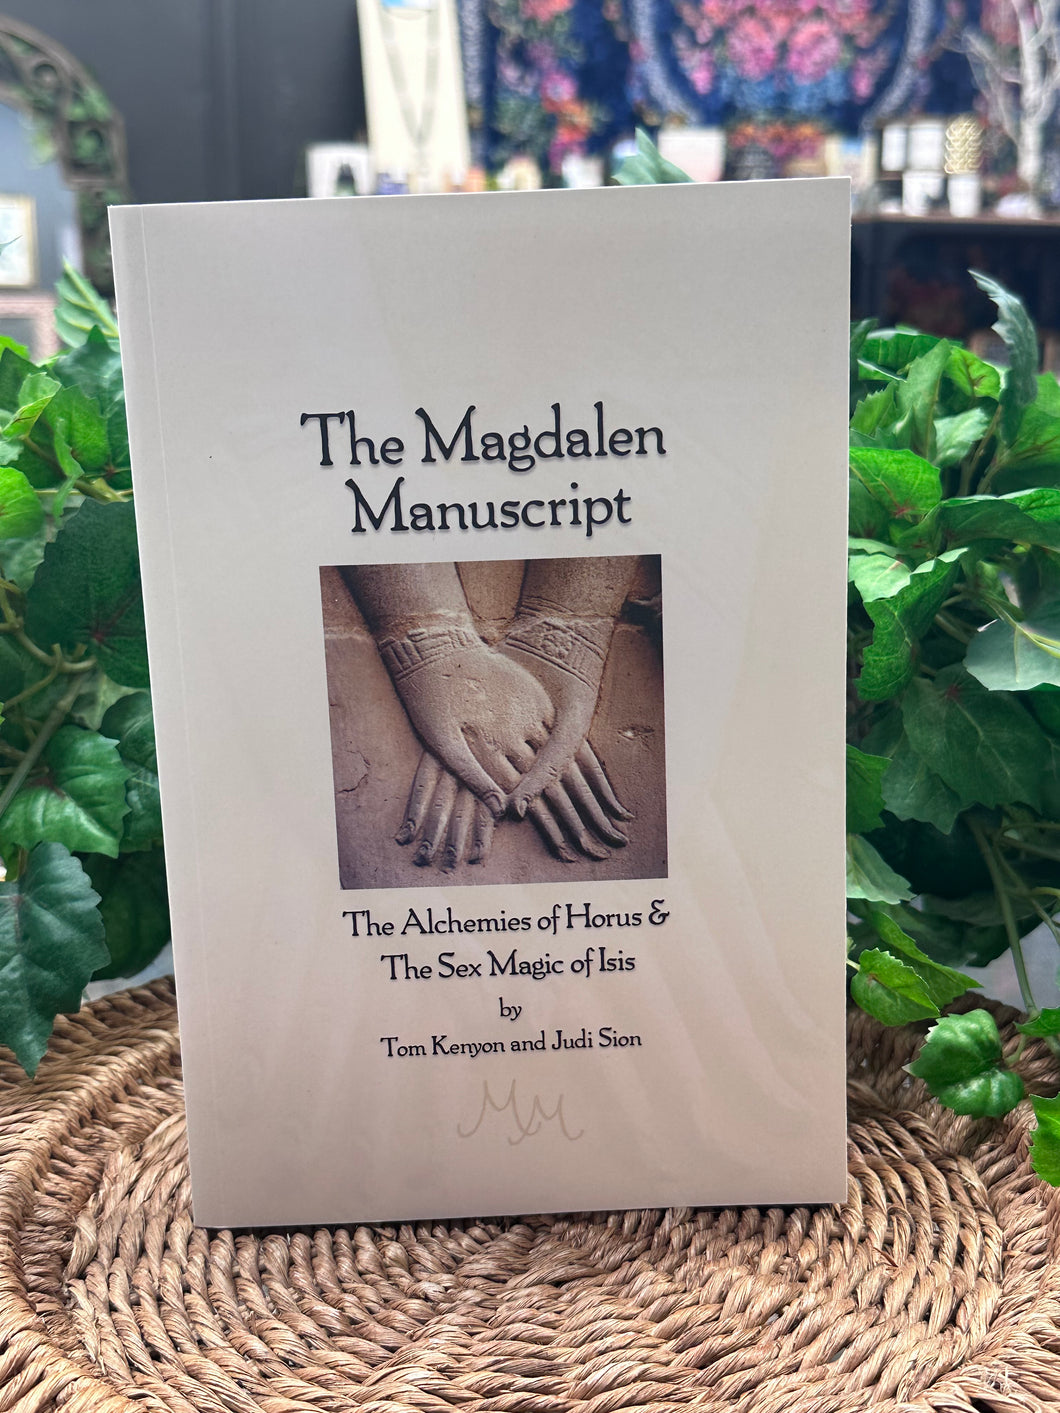 The Magdalene Manuscript